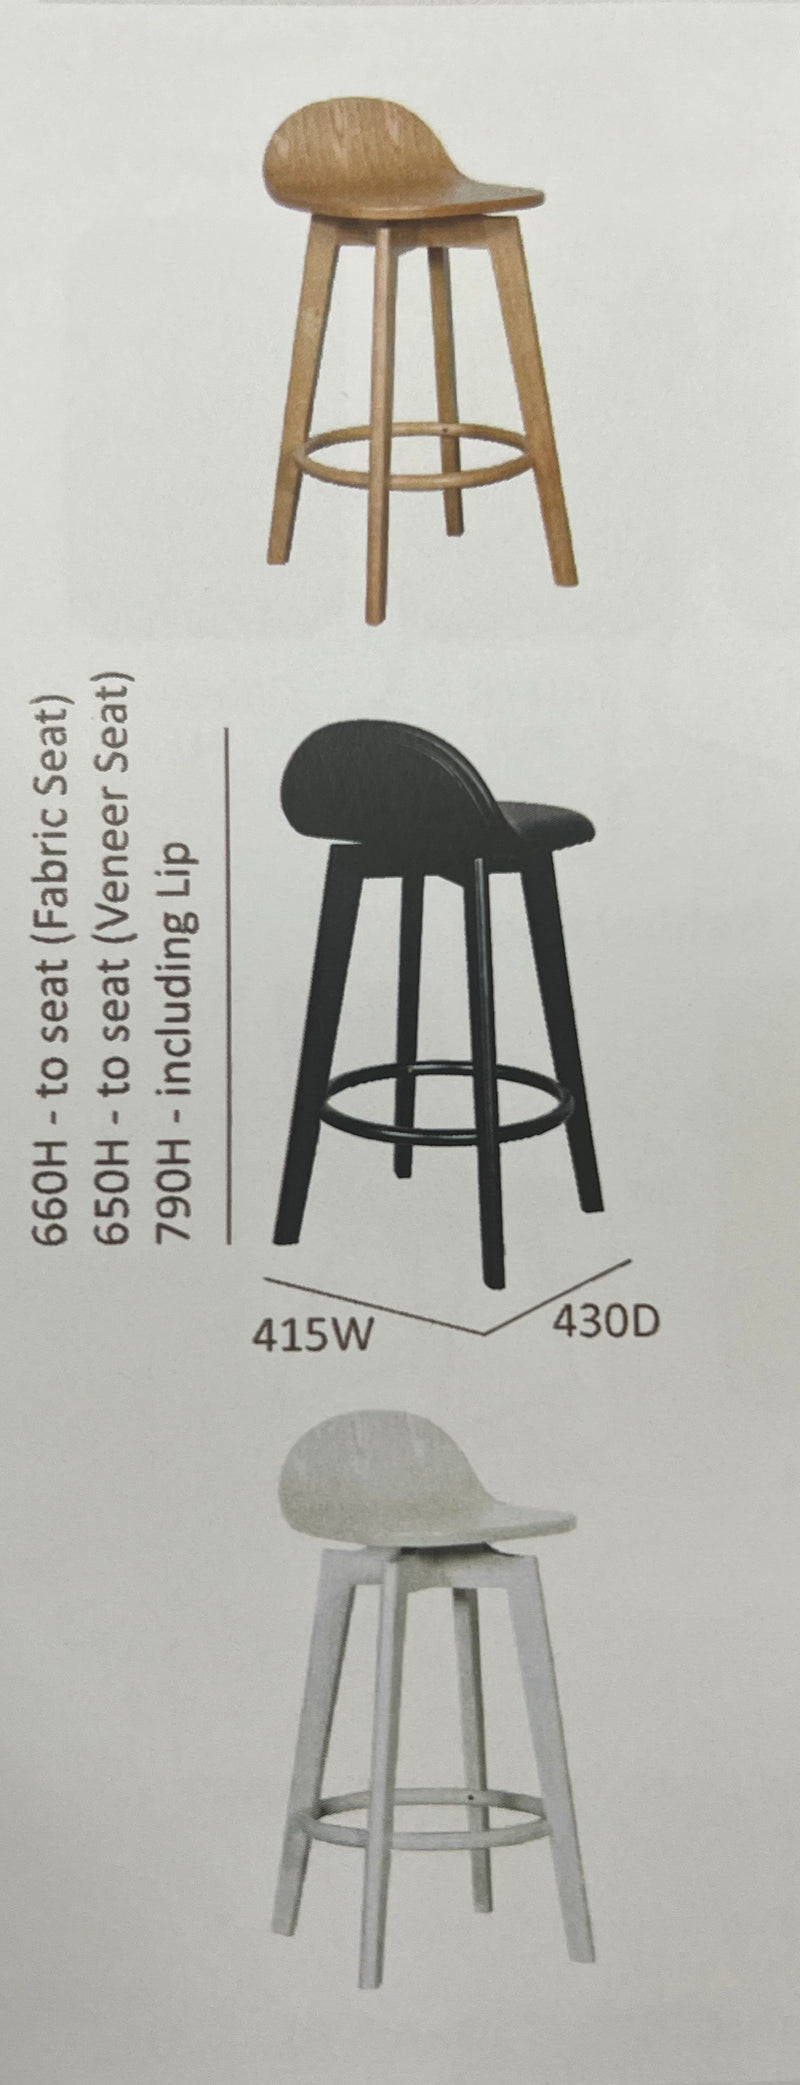 Caulfield bar stool - Full House Furniture